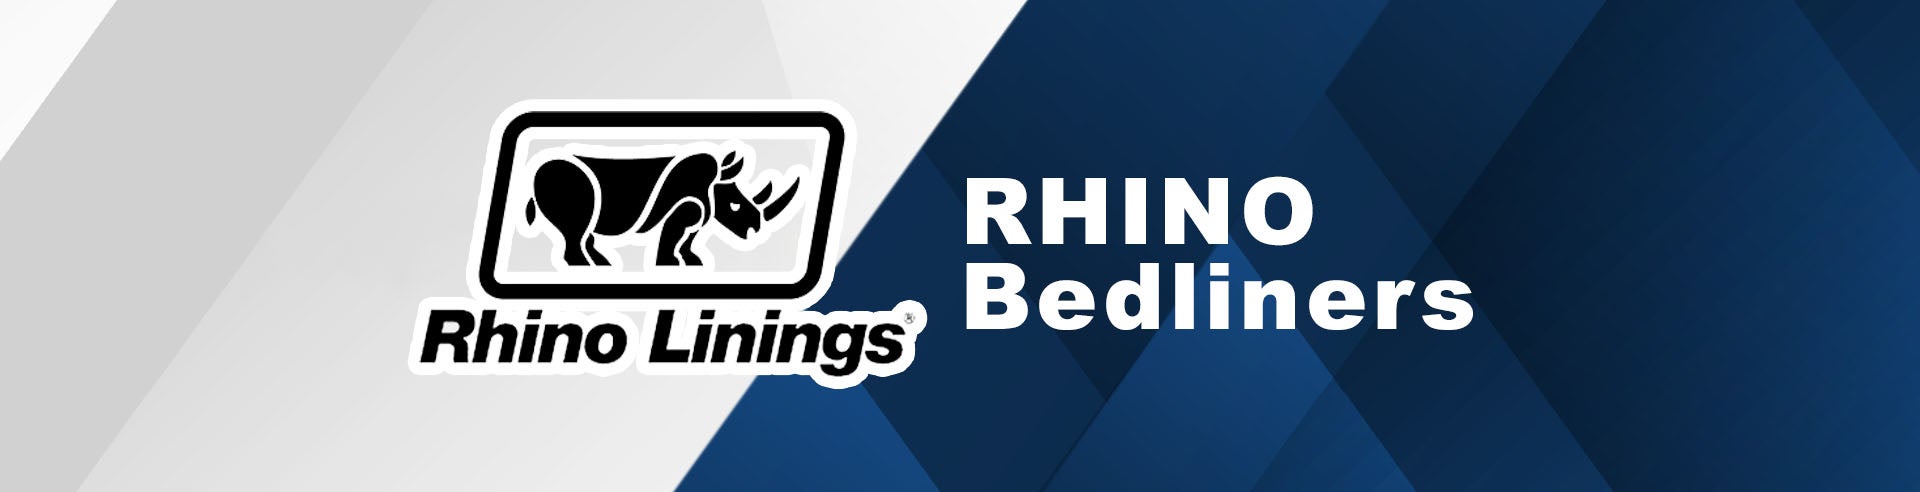 Rhino Bedliners